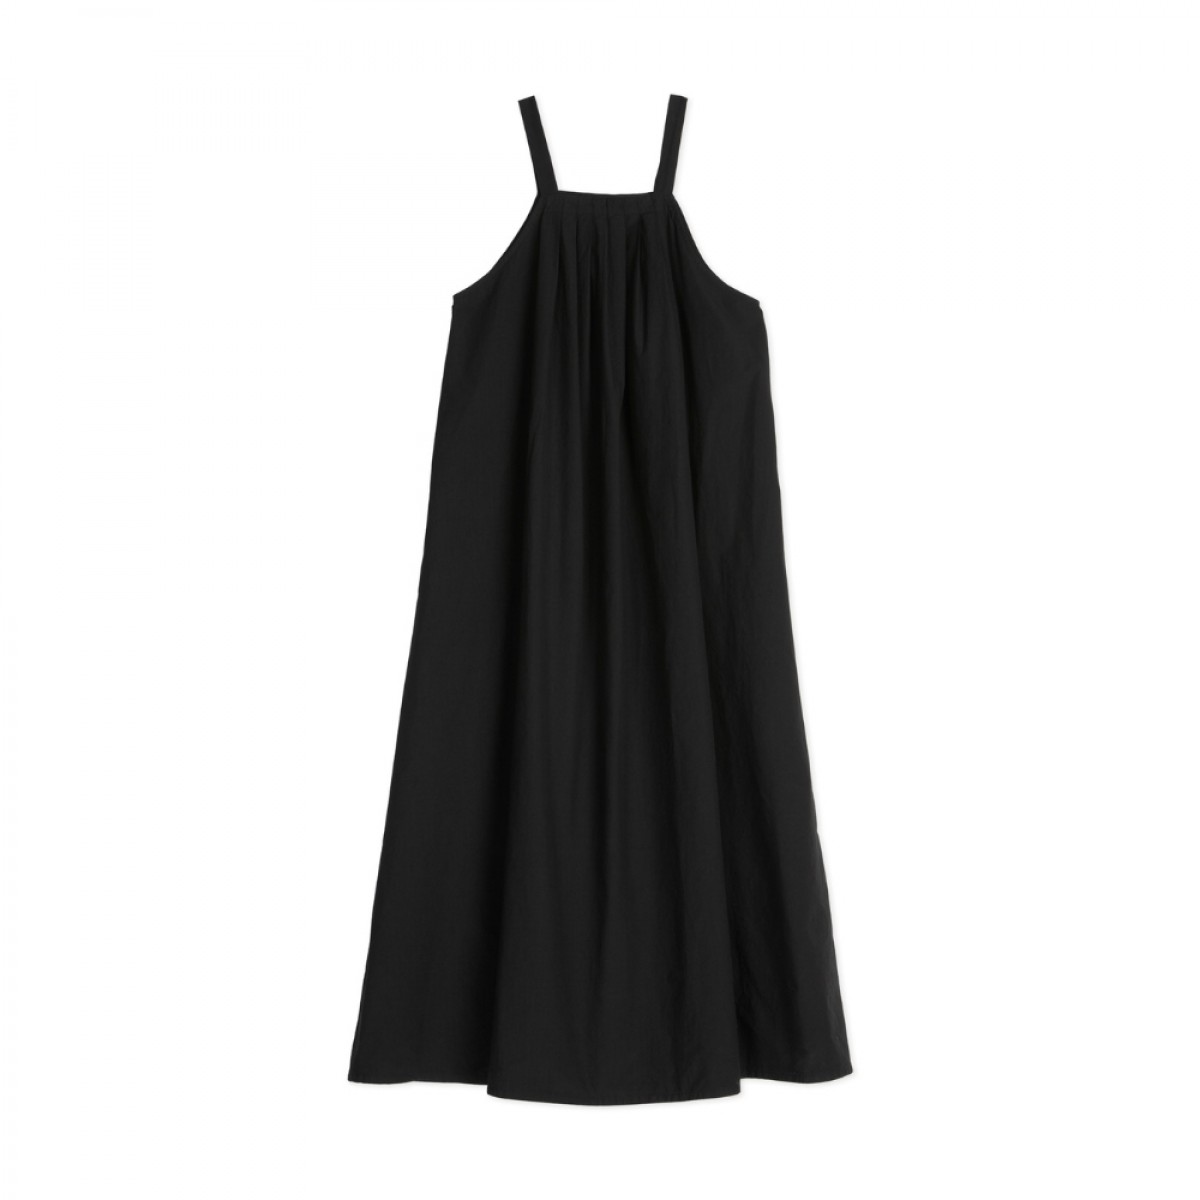 dress fabi - black - front